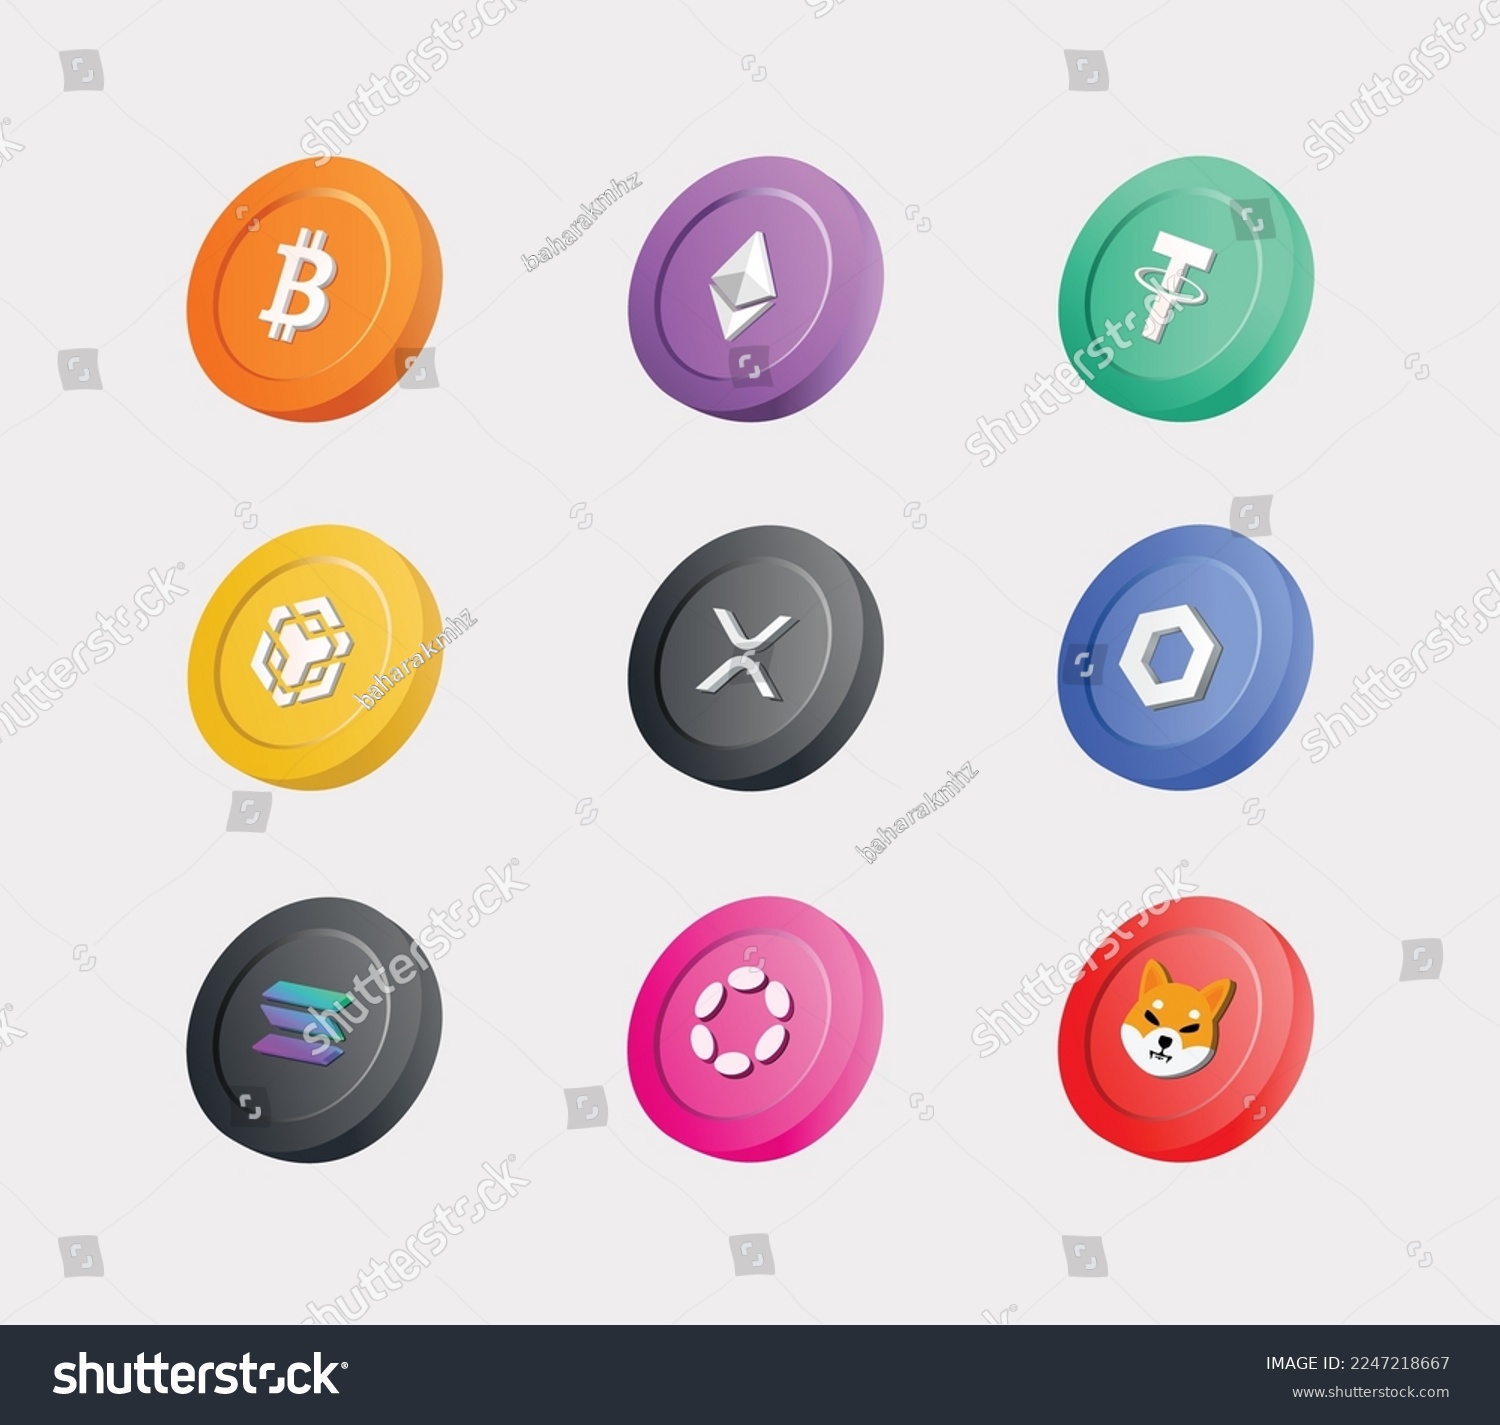 SVG of 3d illustration of cryptocurrency coin set . Bitcoin-BTC, Ethereum-ETH, Tether-USDT,Binance Coin-BNB, XRP-XRP, Chainlink-LINK , Solana-SOL , Polkadot-DOT , Shiba ino-SHIB svg